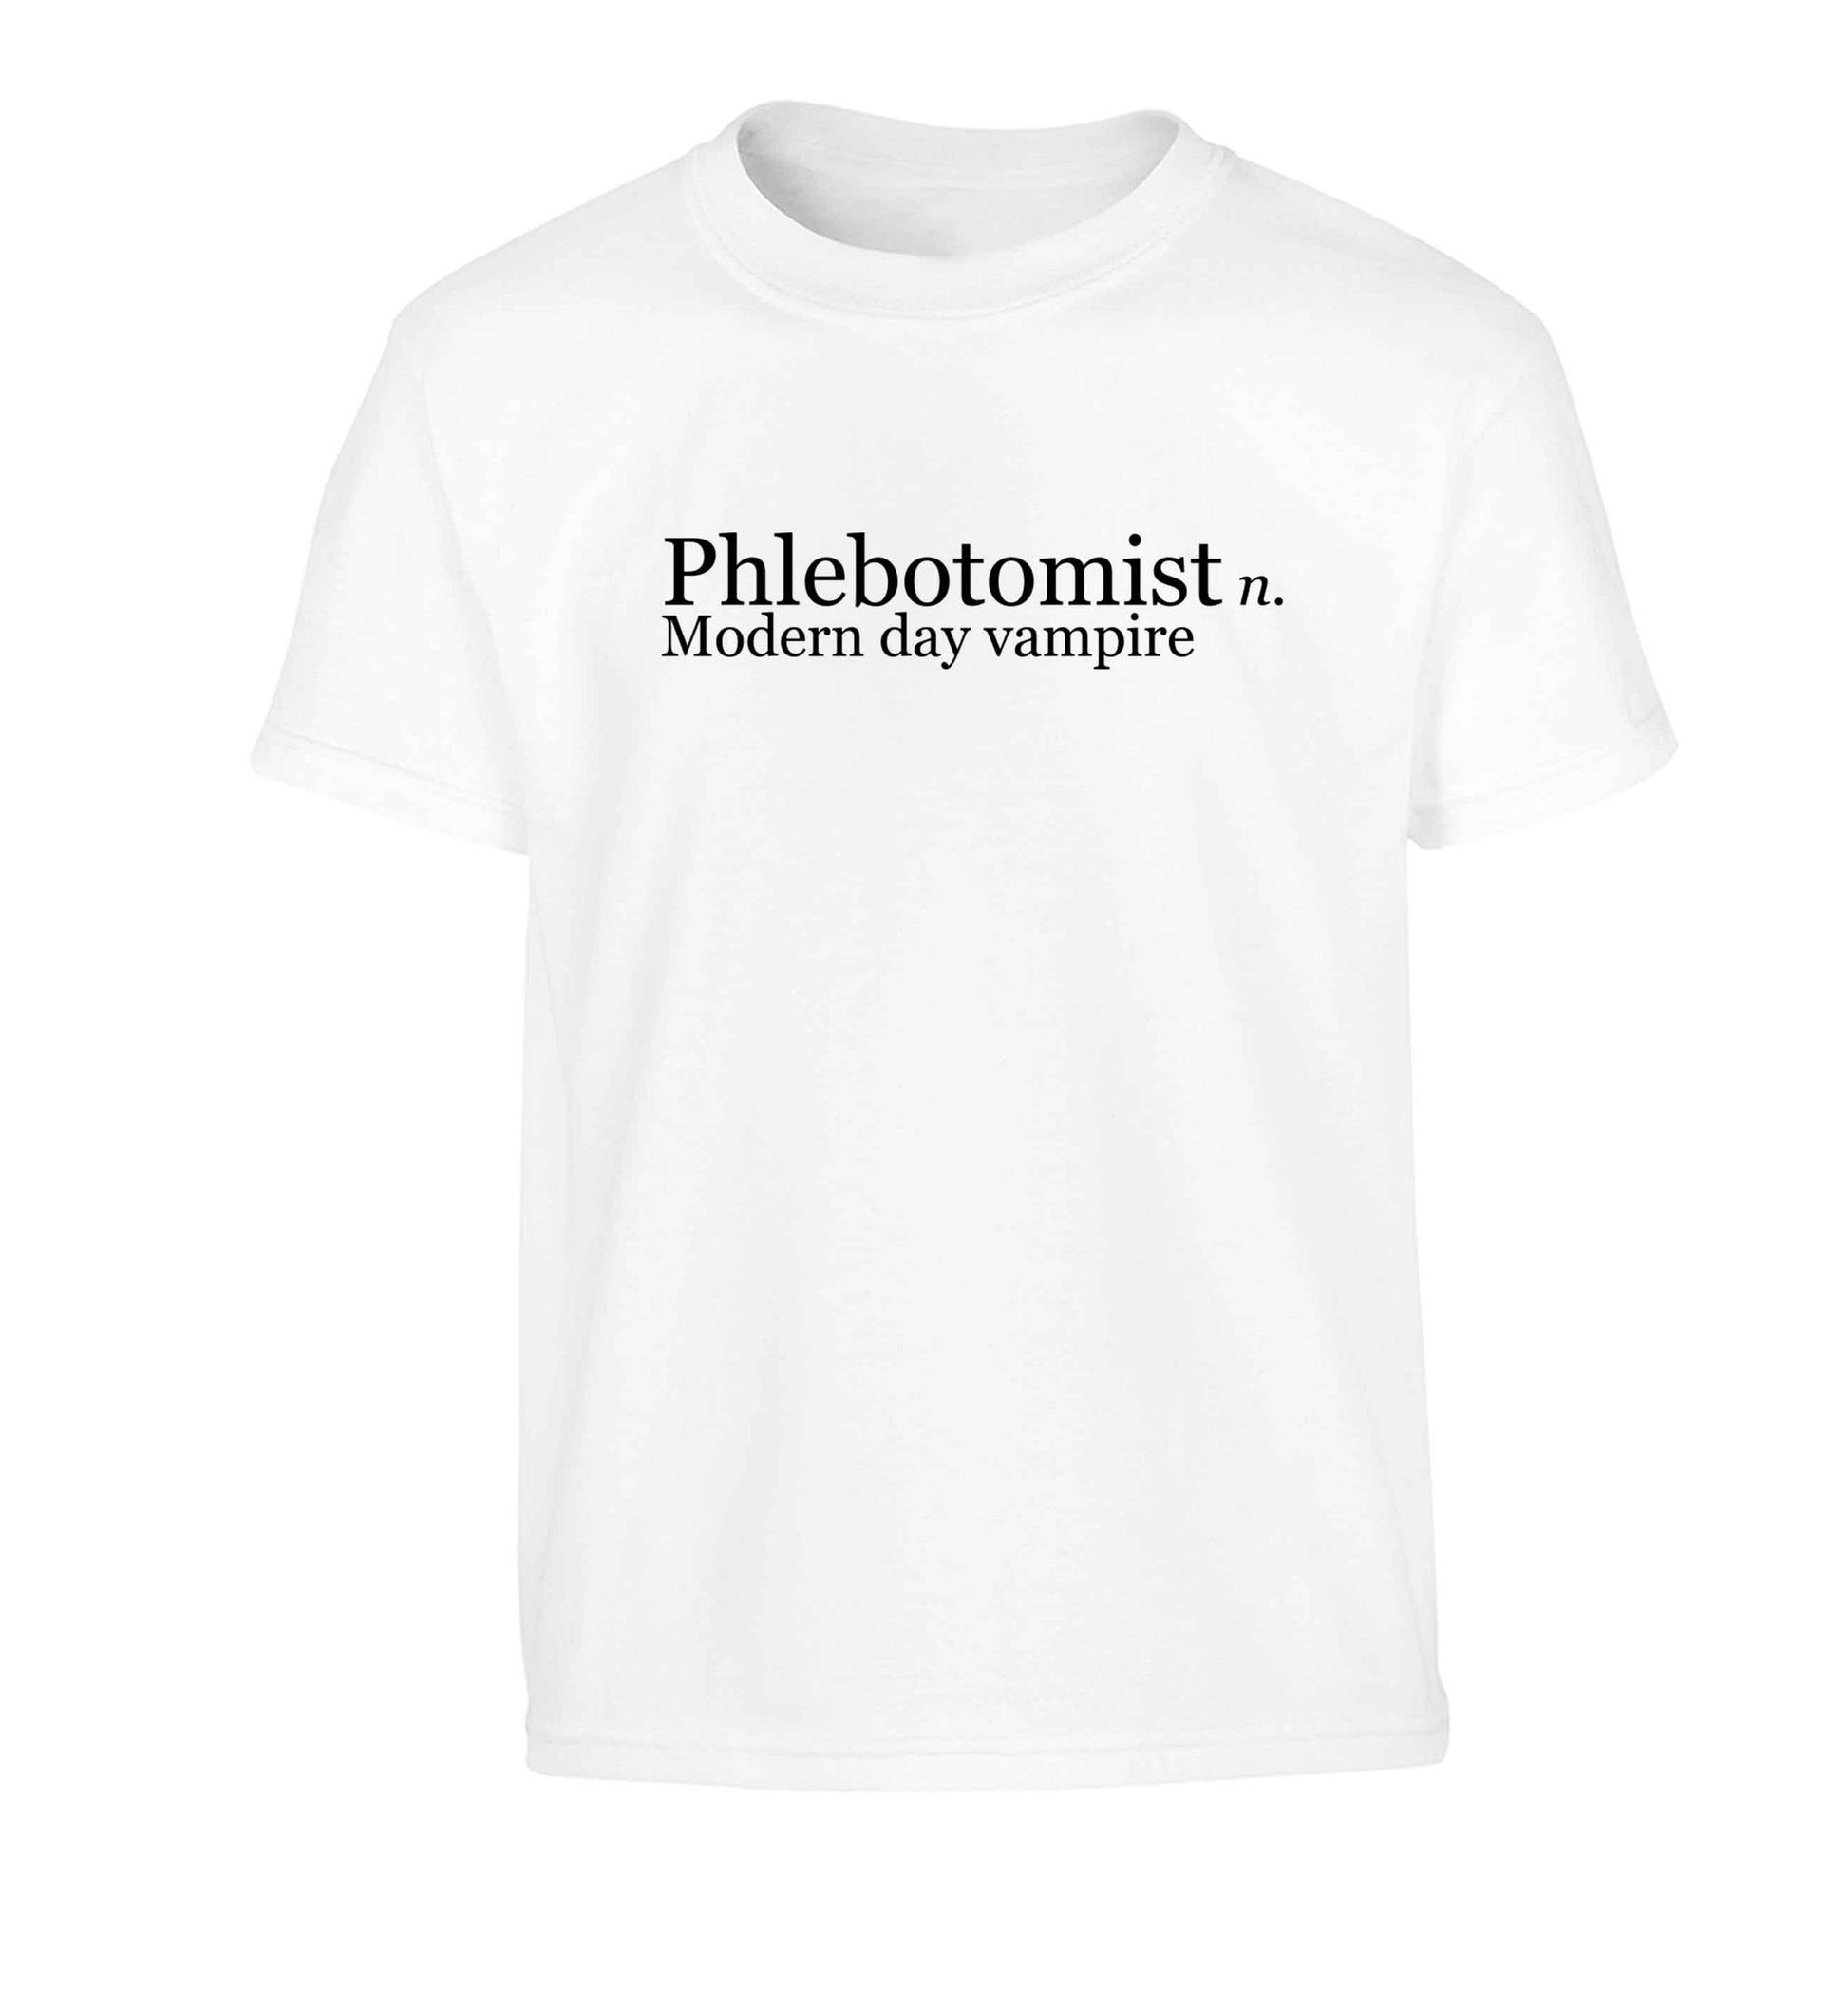 Phlebotomist - Modern day vampire Children's white Tshirt 12-13 Years